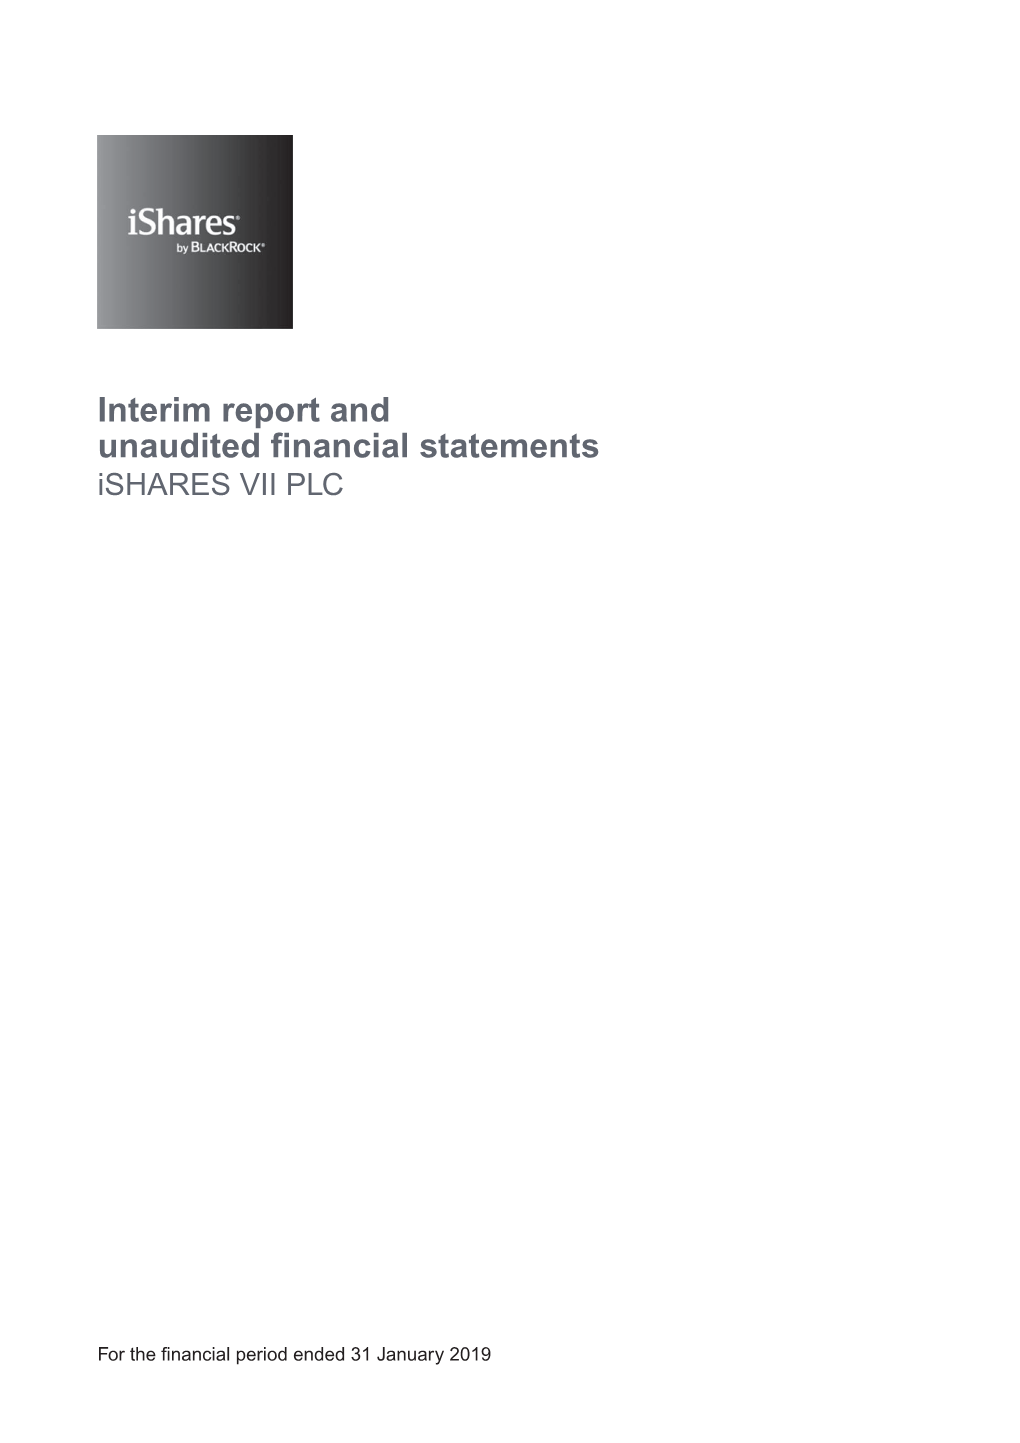 Interim Report and Unaudited Financial Statements Ishares VII PLC